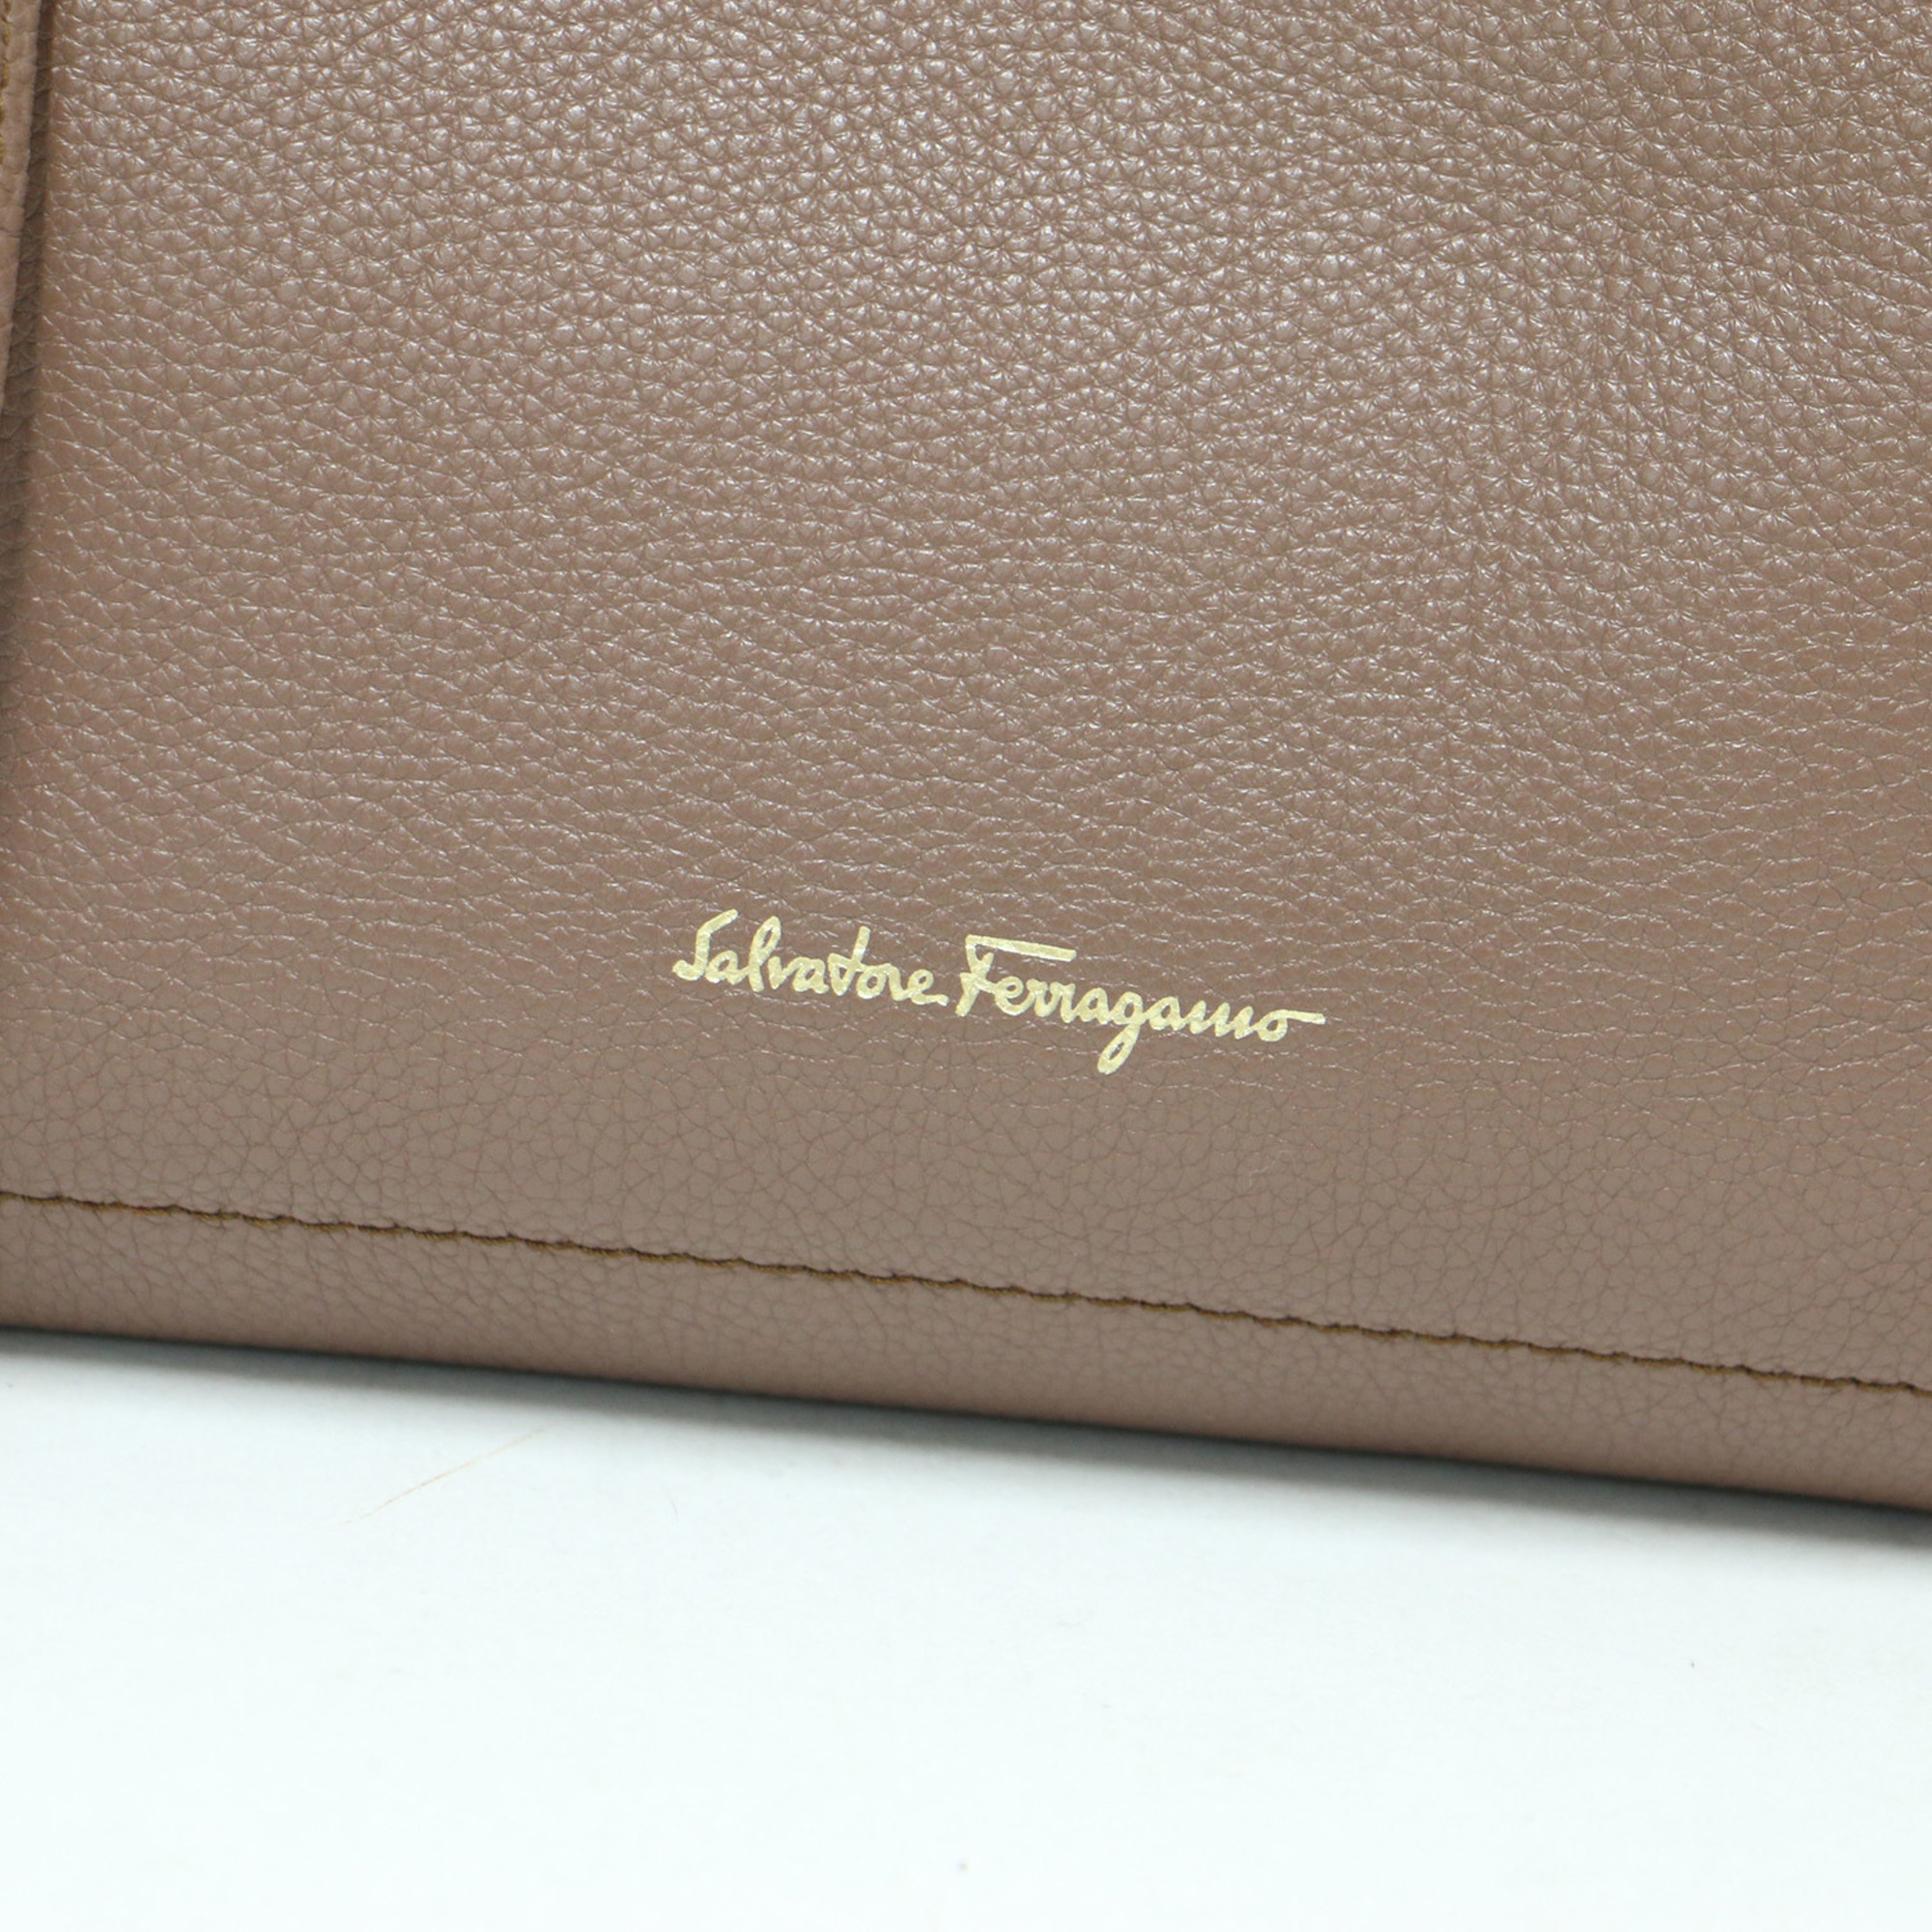 Salvatore Ferragamo Bag Tote Brown Orange Bicolor Gancini Logo AMY Leather Adult Office Business Elegant Shoulder